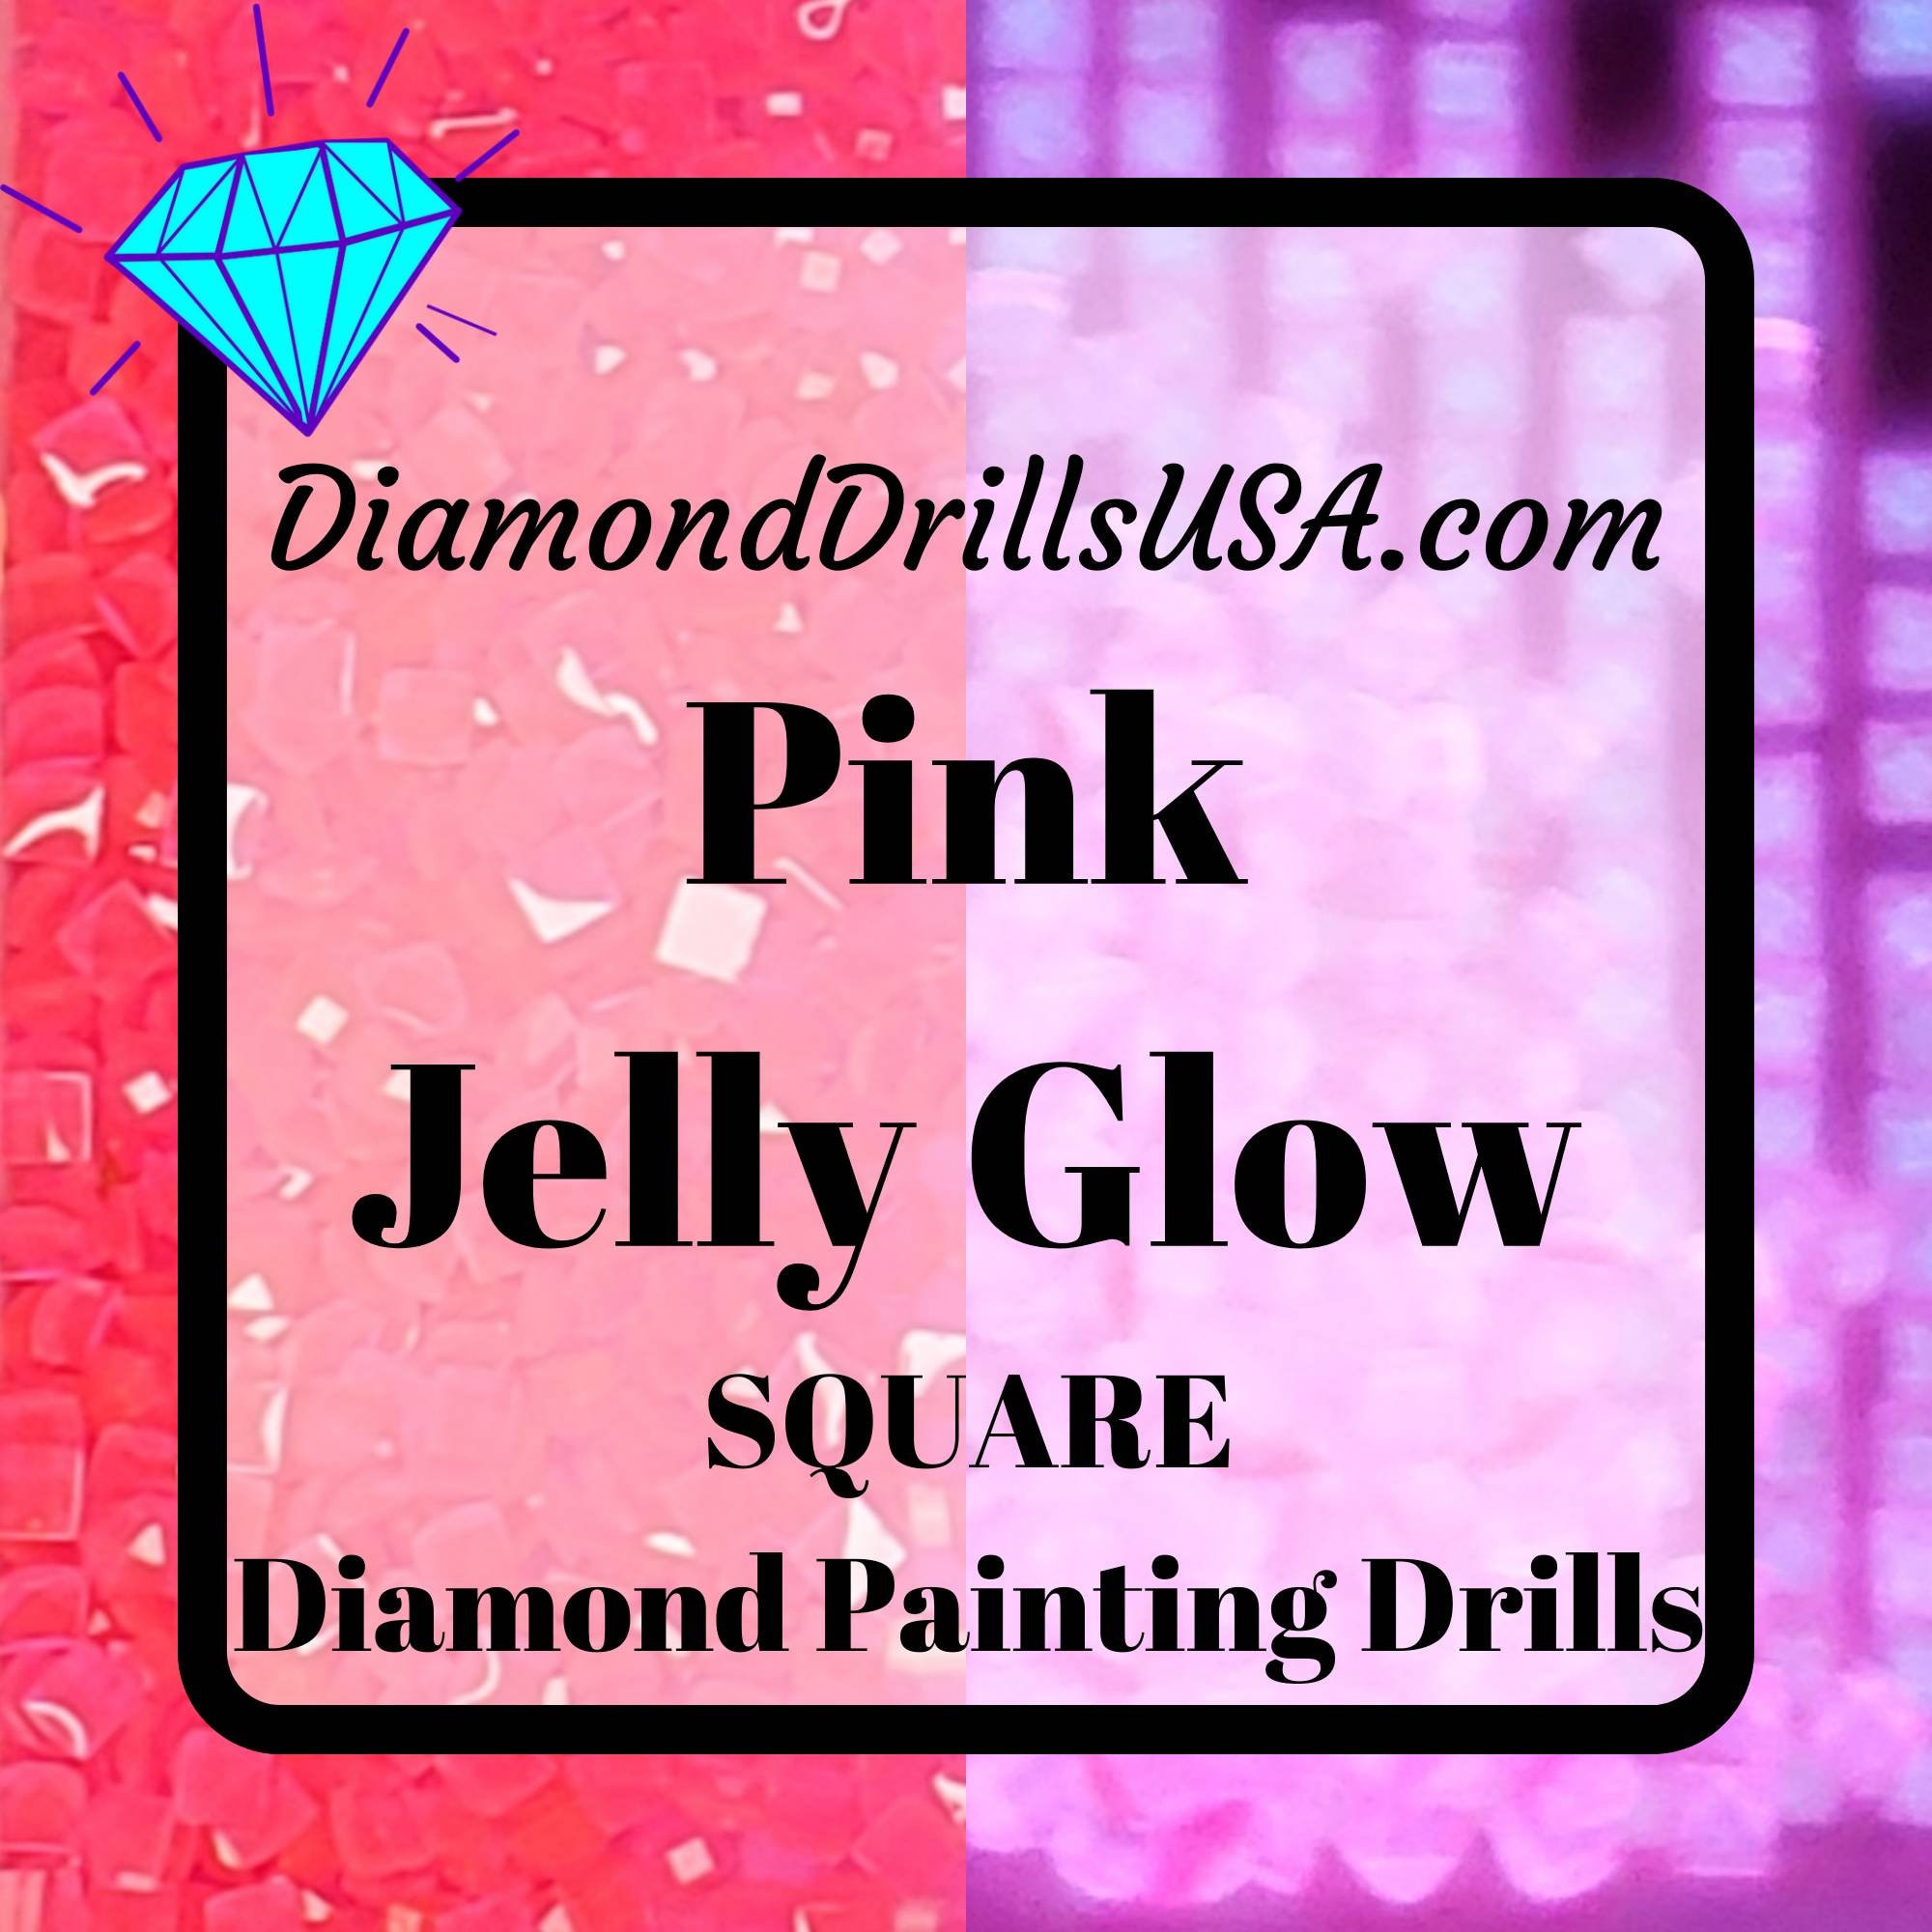  WELYEA Glow Diamond Painting Pens - 4 Pack Glow In